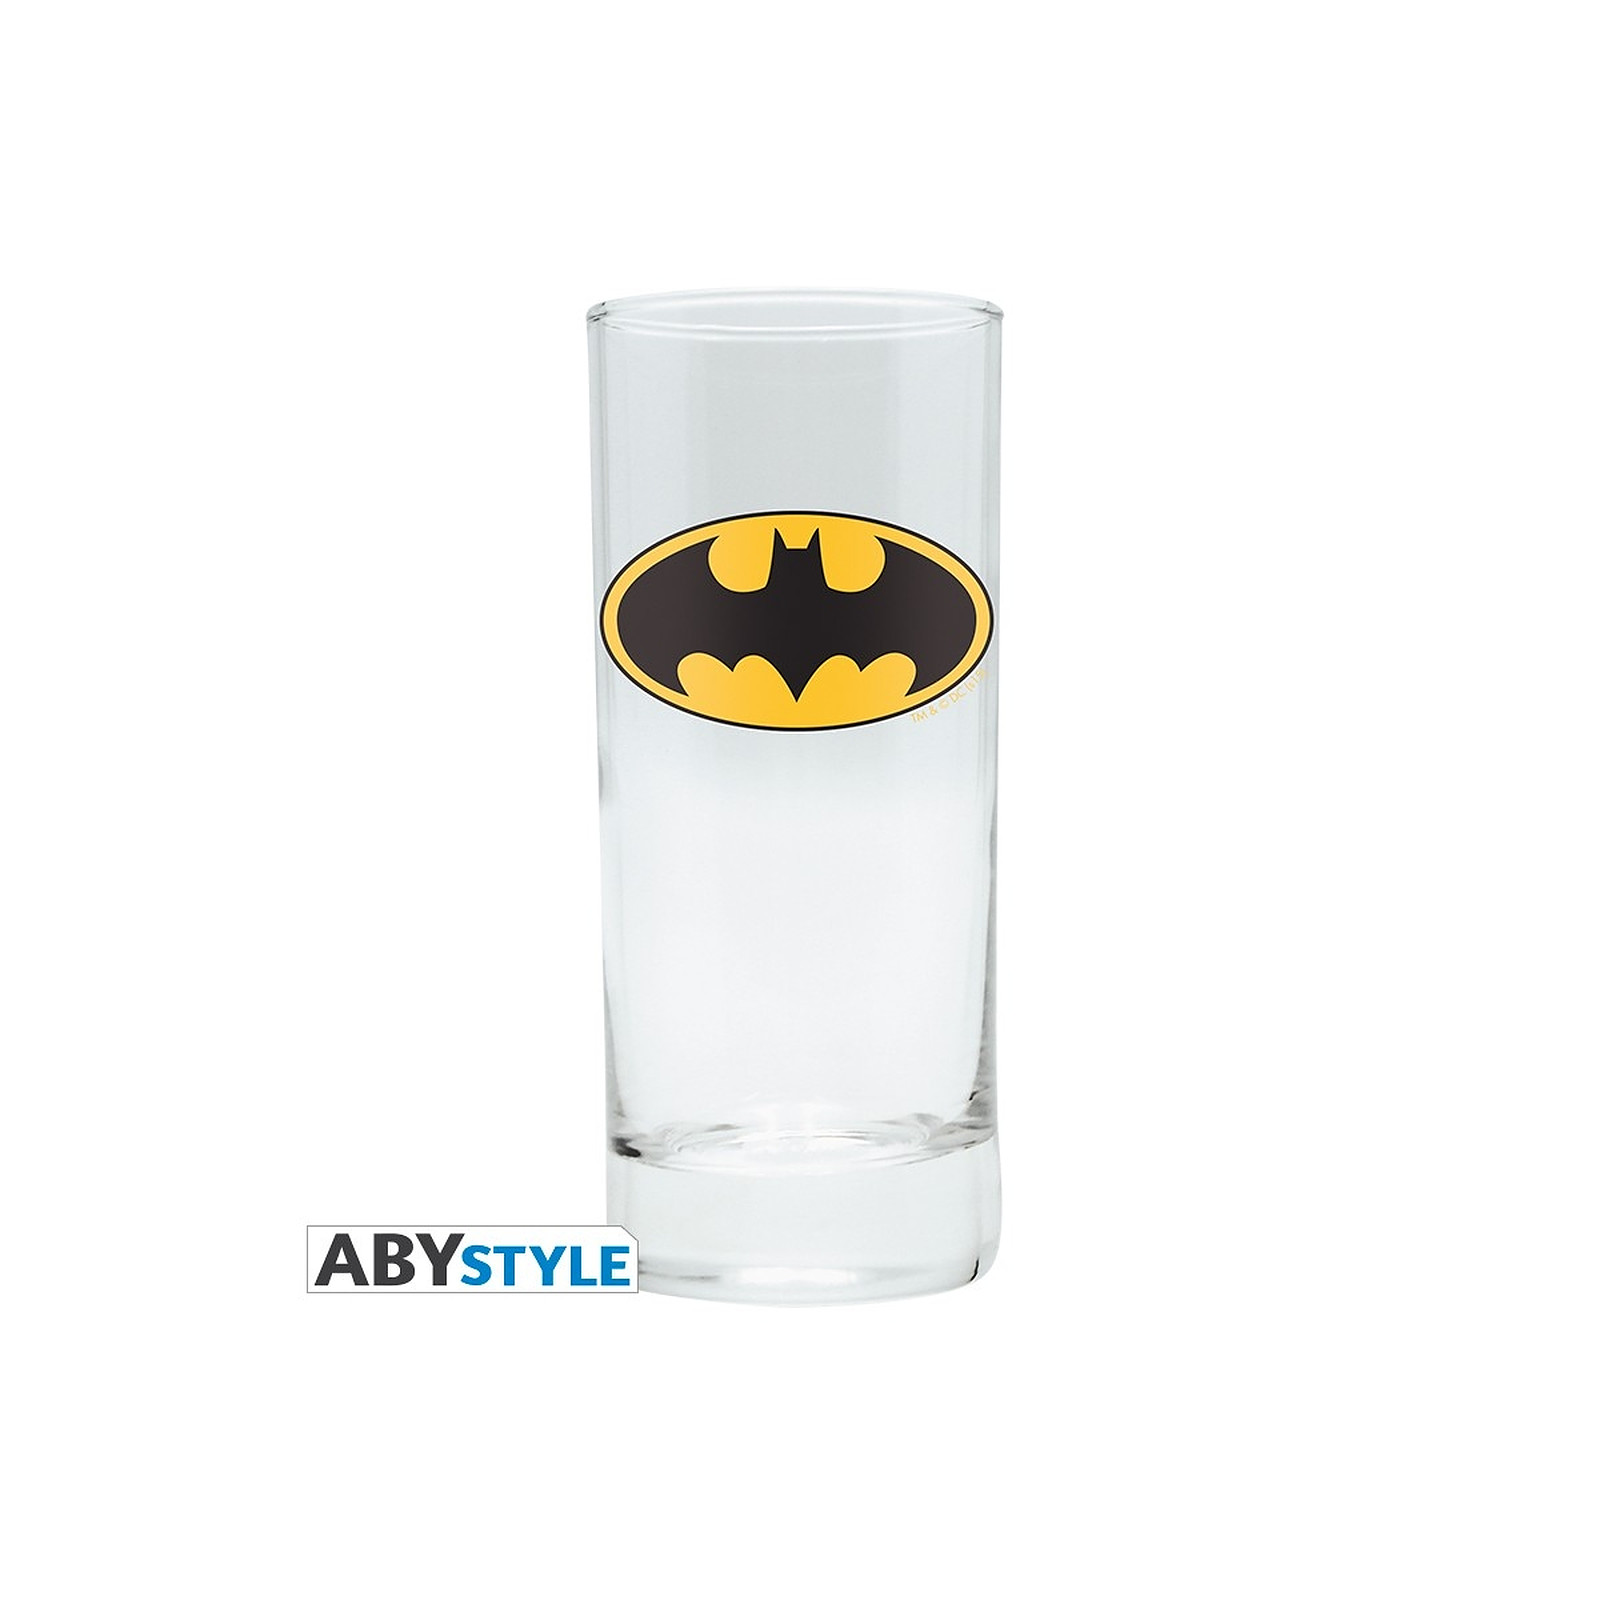 Batman - Verre Batman - Vaisselle Abystyle